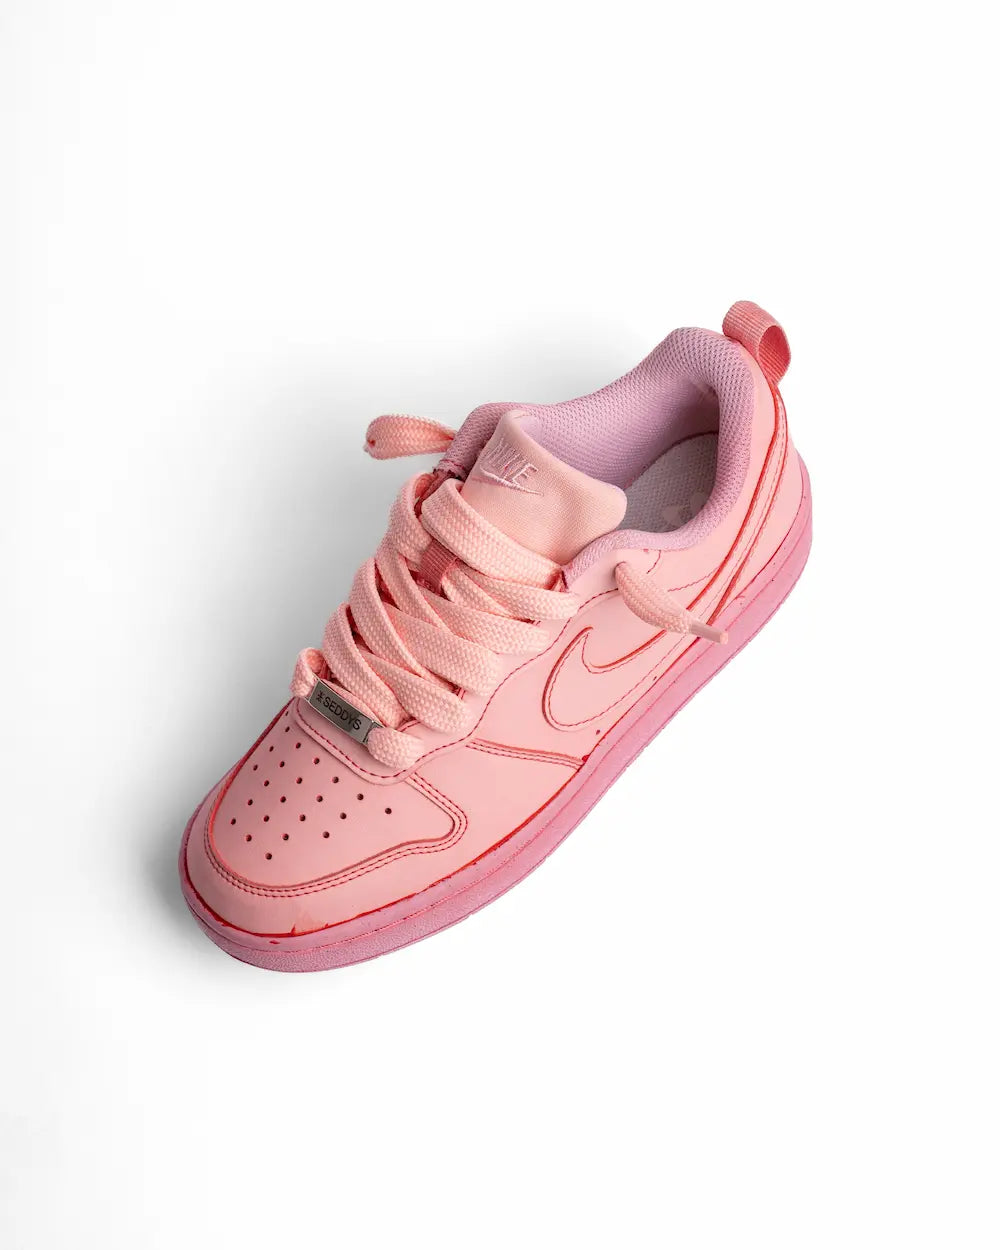 Nike Court Borough Dye Super Pink personalizzata in rosa